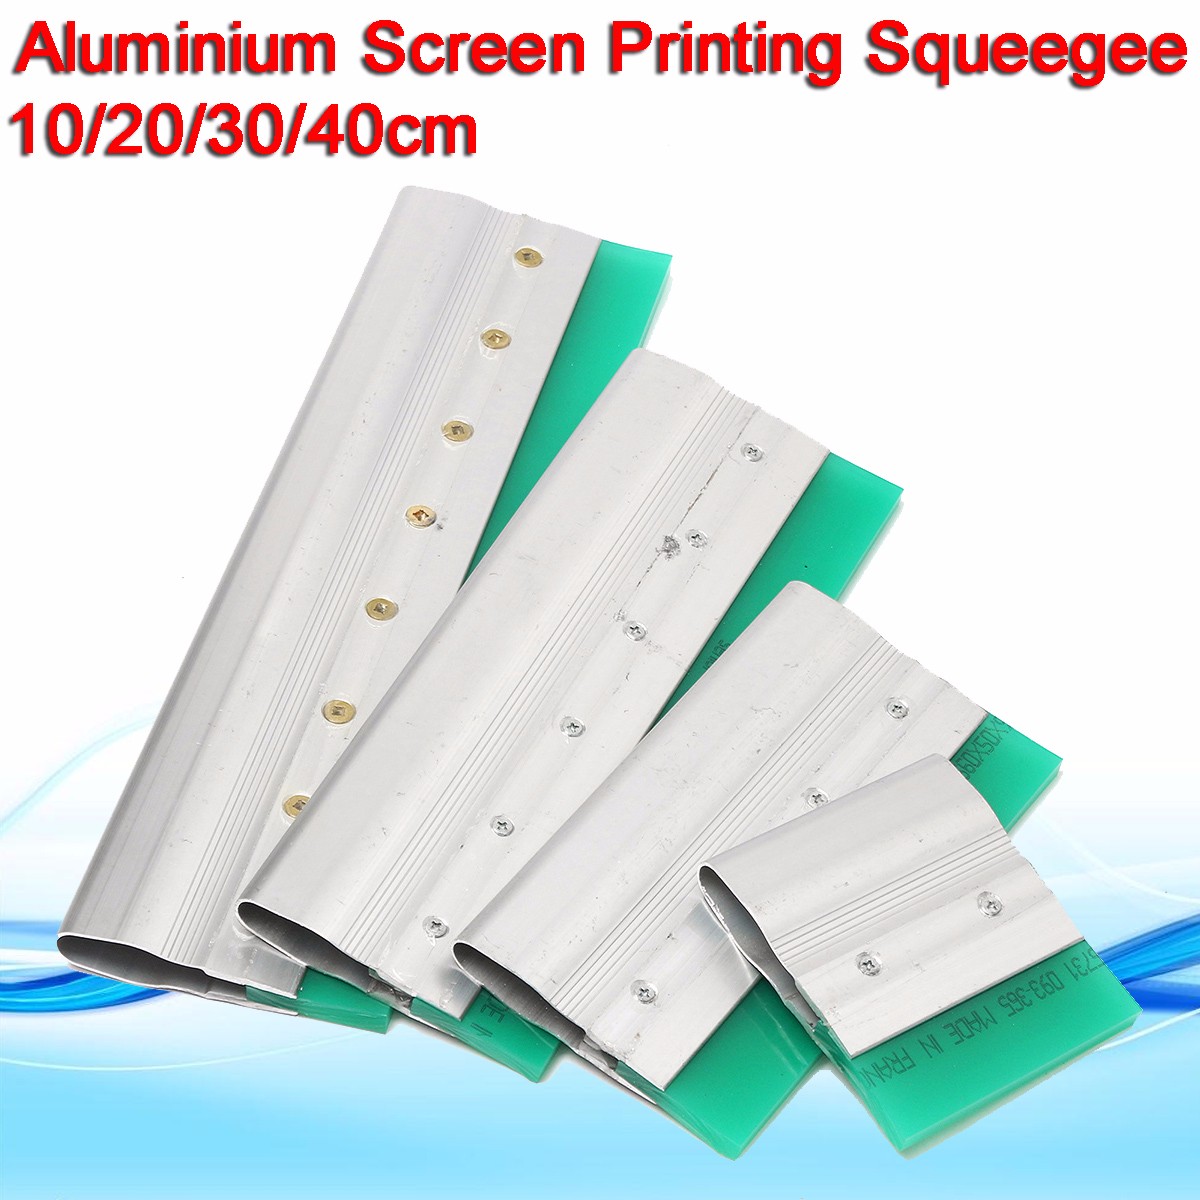 Aluminium-Screen-Printing-Squeegee-Blade-Ink-Scraper-Blade-Tool-10203040cm-1113704-1